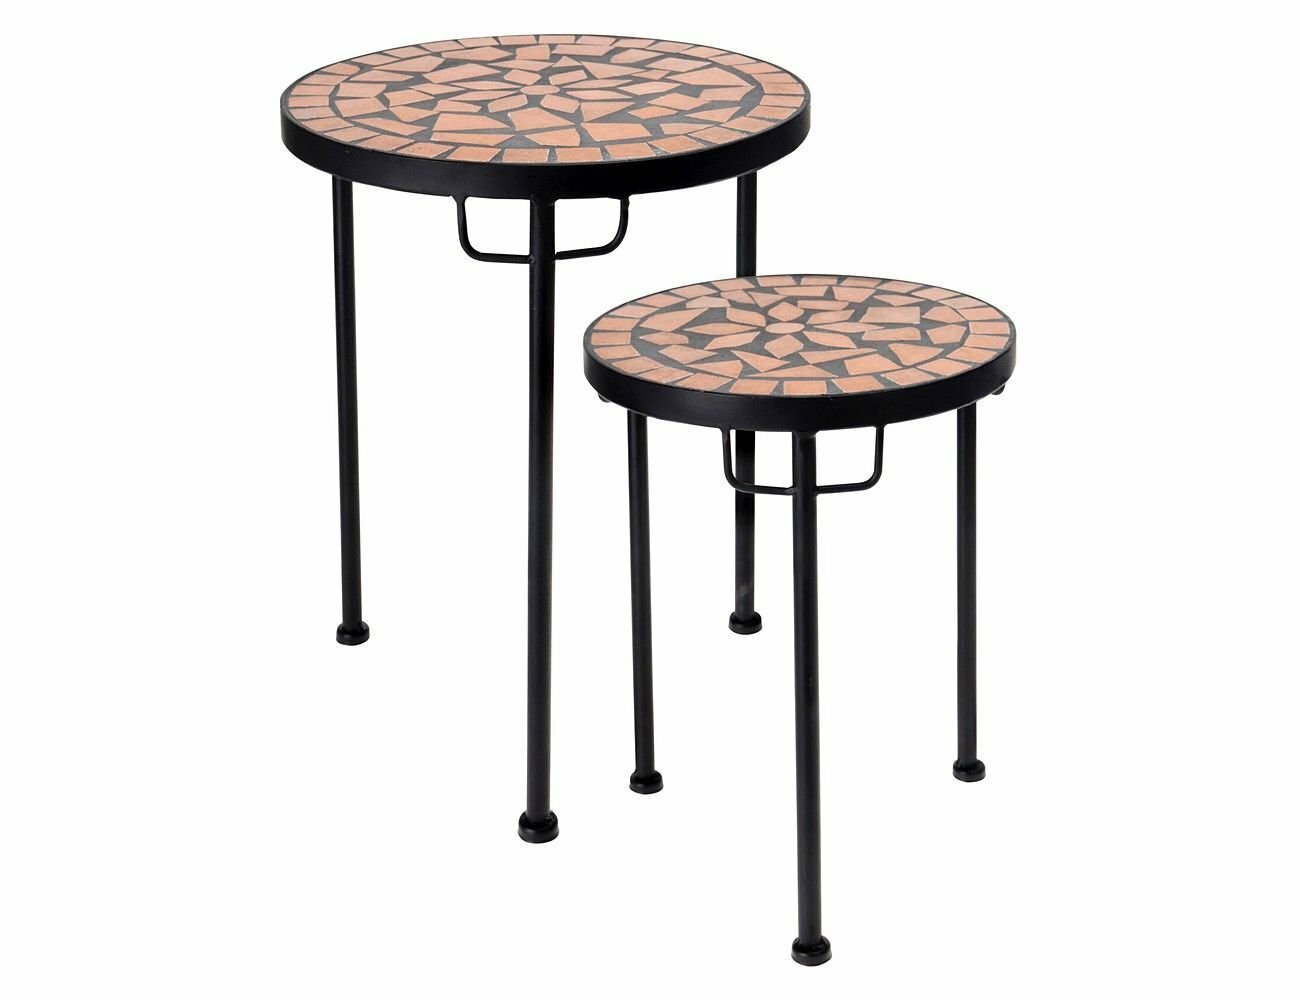 Комплект столиков для цветов террамо, 32-38 см, 2 шт, Koopman International X75000250